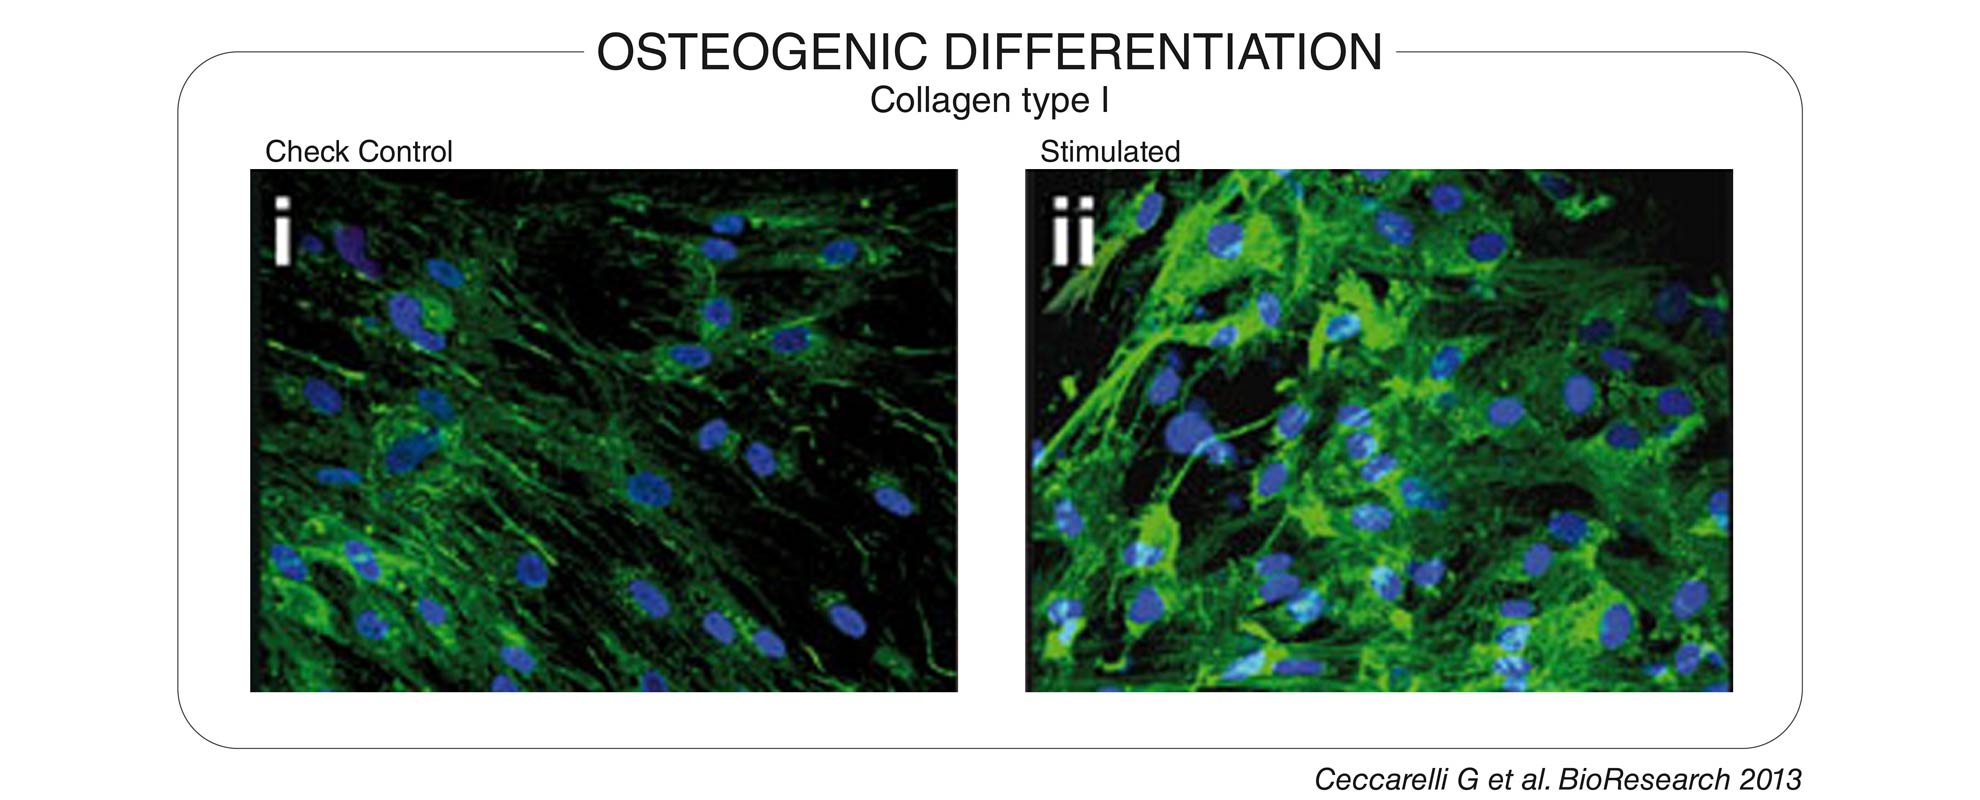 Osteogenic differentiation